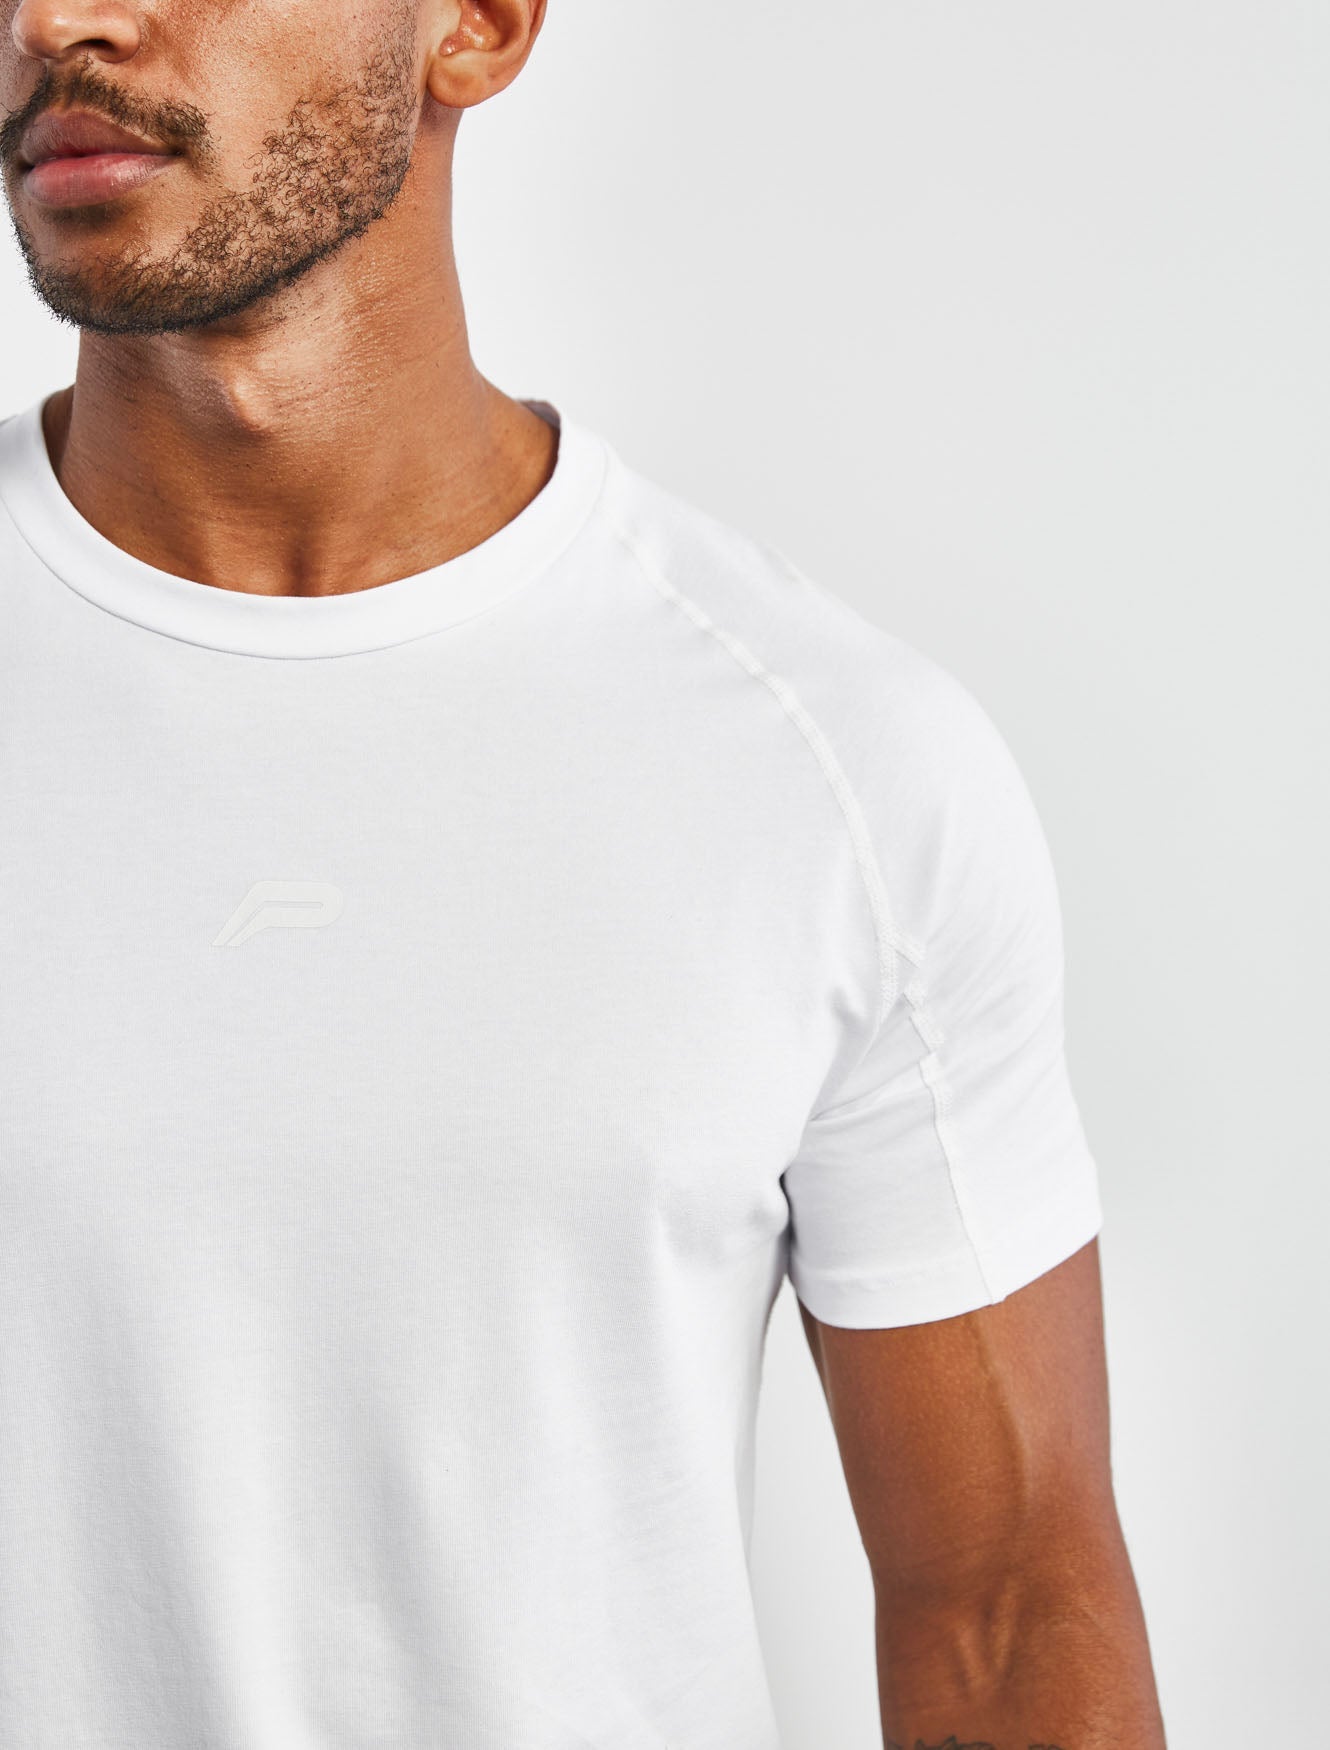 Icon T-Shirt / White Pursue Fitness 2